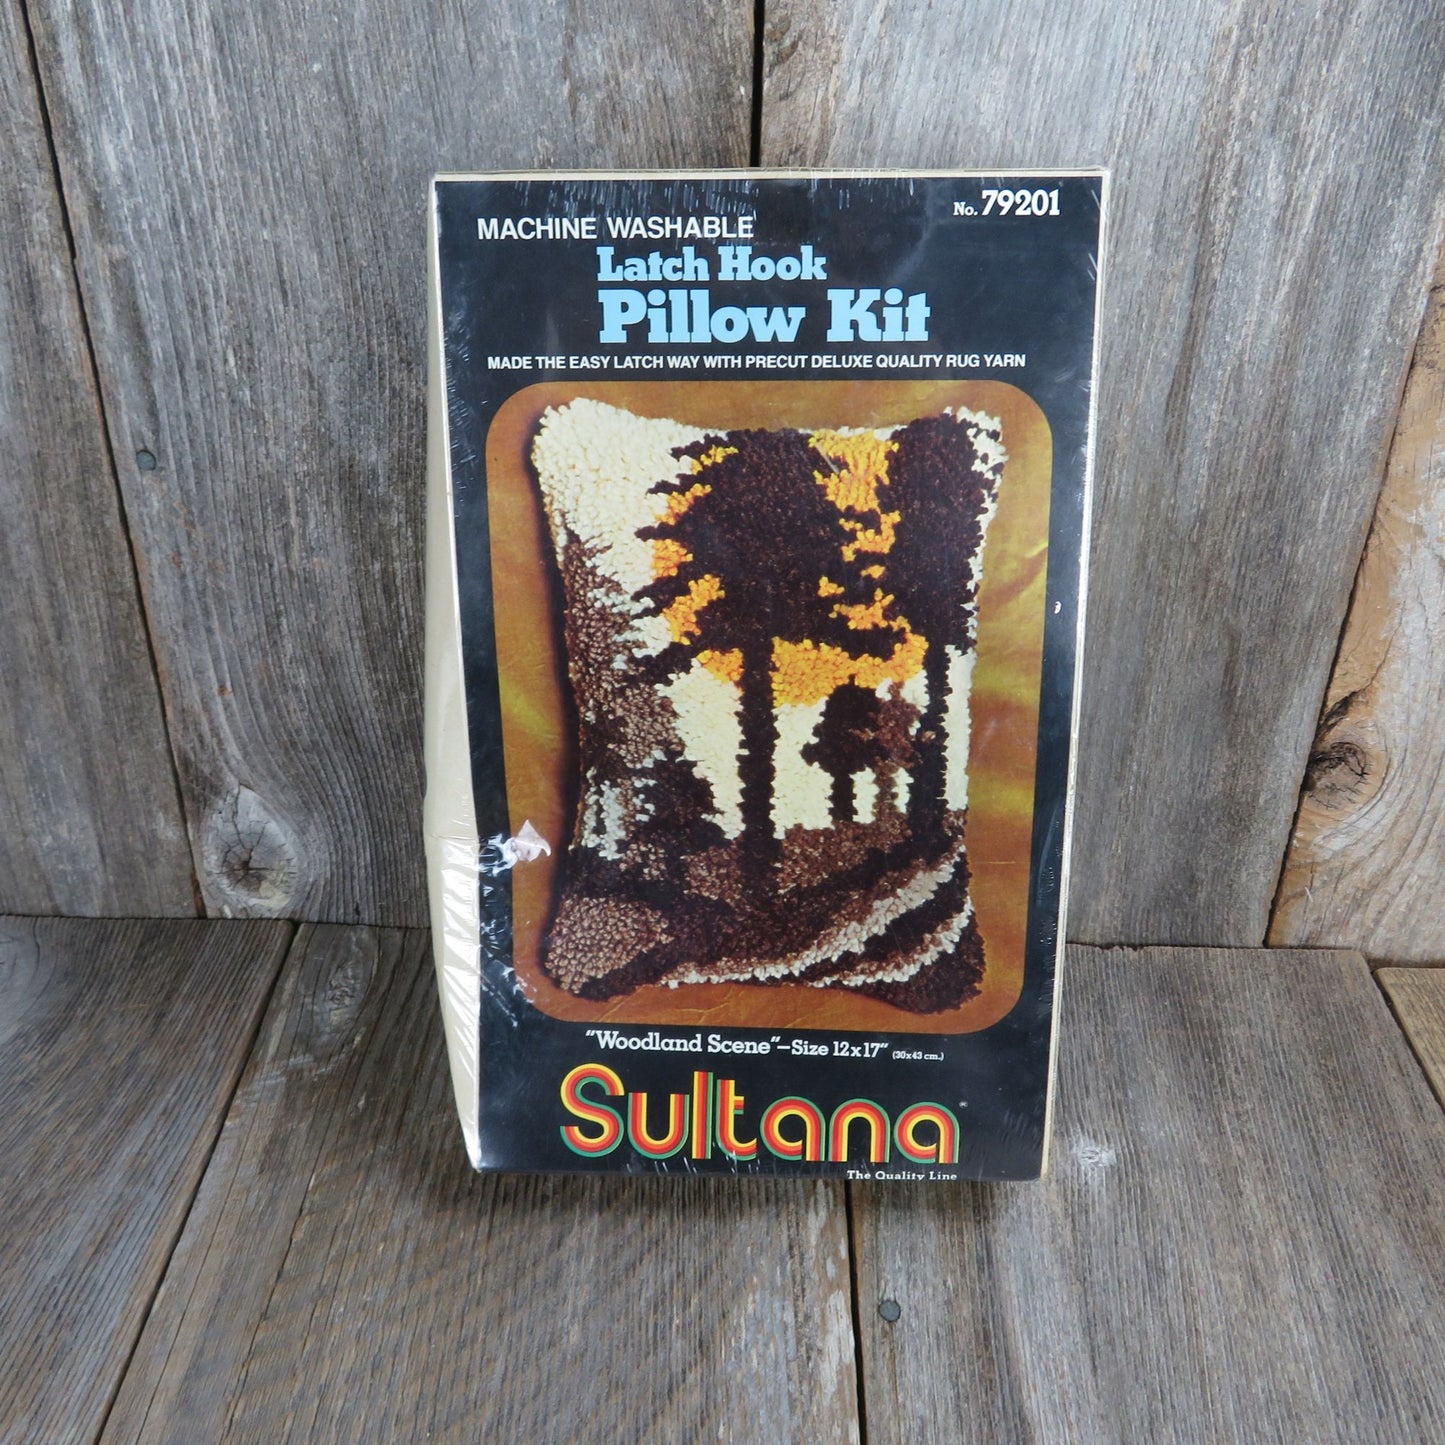 Vintage Woodland Scene Latch Hook Rug Pillow Kit Sultana Trees Orange Brown 79201